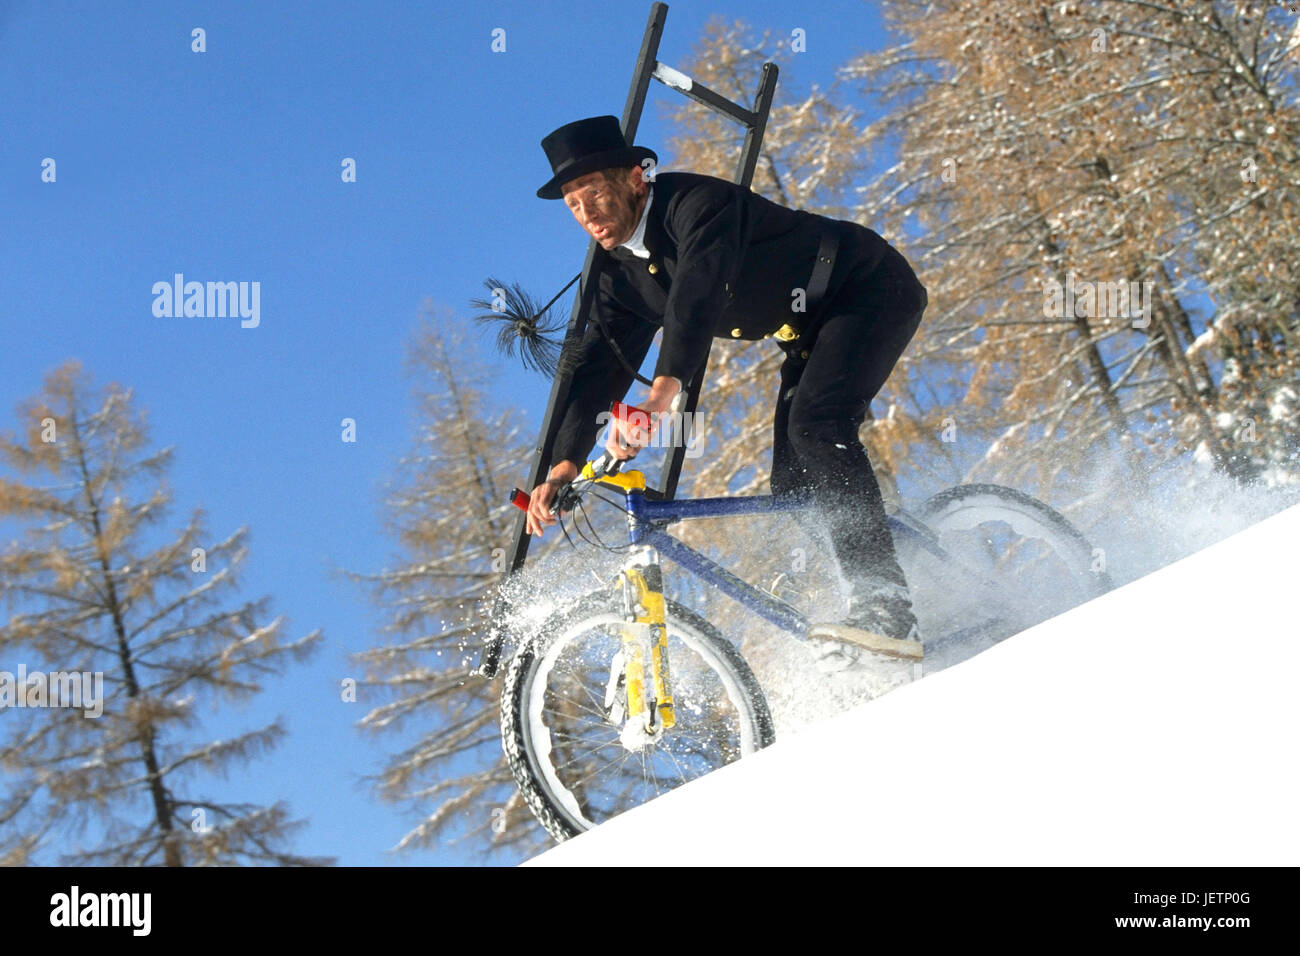 Ramoneur sur le vtt dans la neige, Schornsteinfeger auf dem Mountainbike im Schnee Banque D'Images